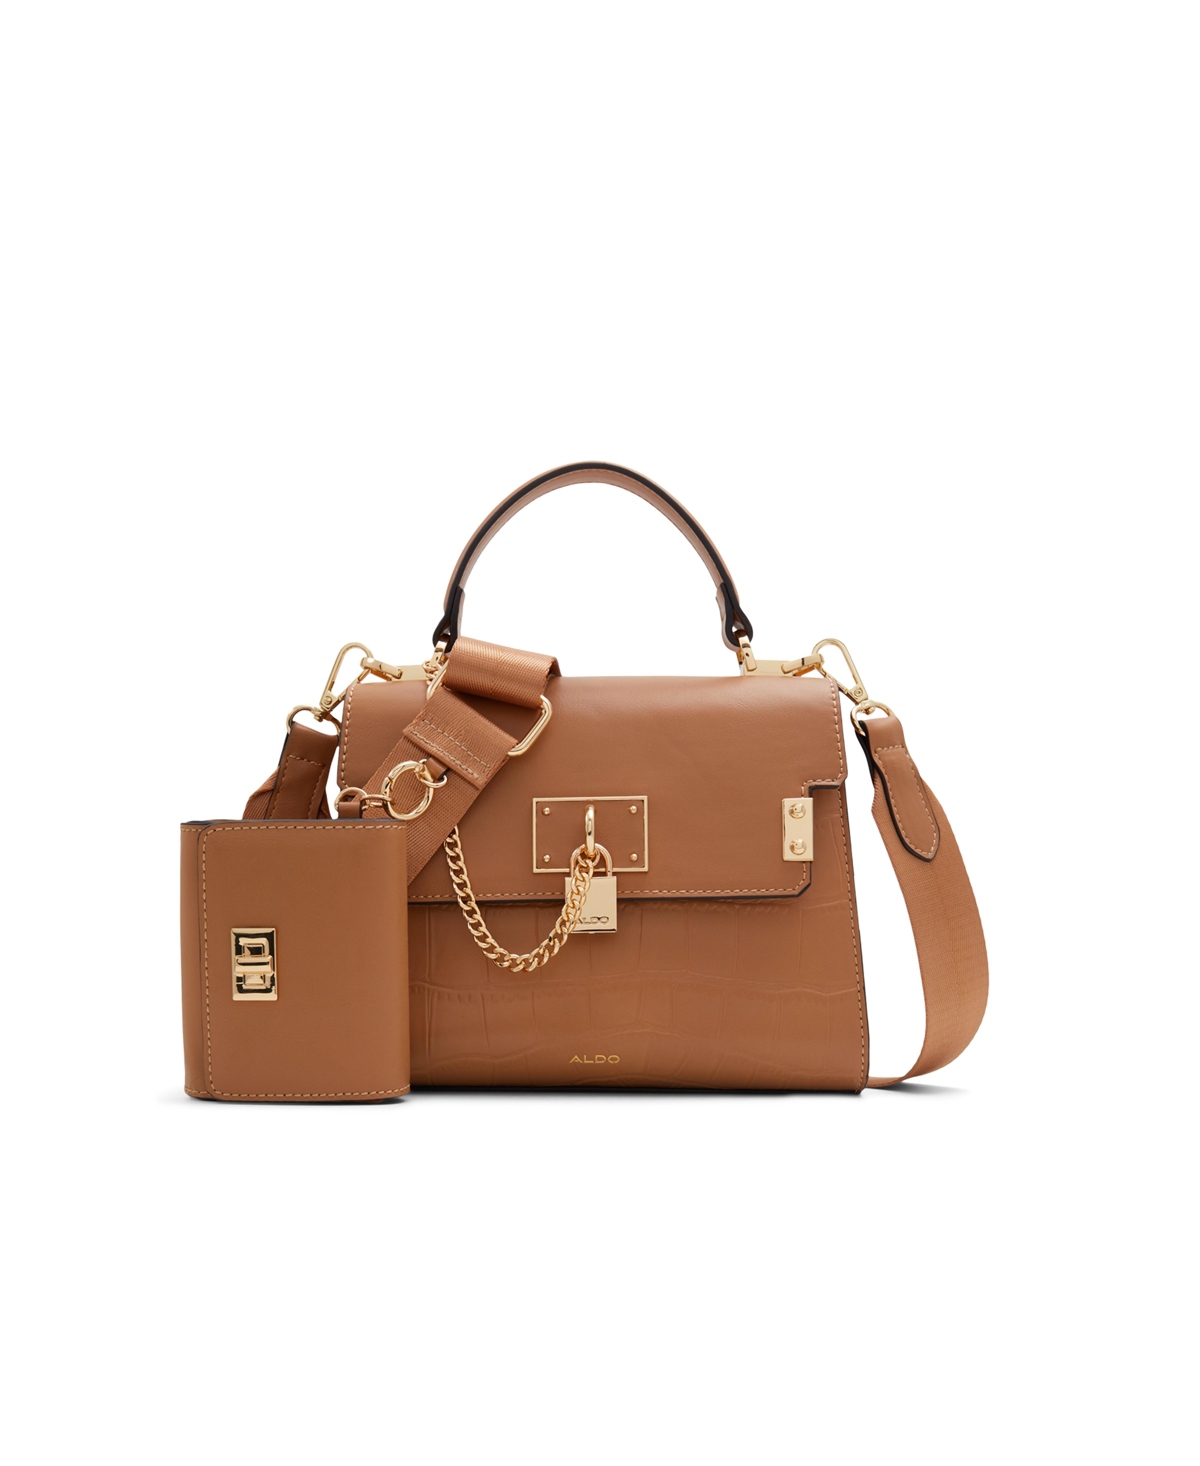 Porsha Women's City Handbags - Light Brown